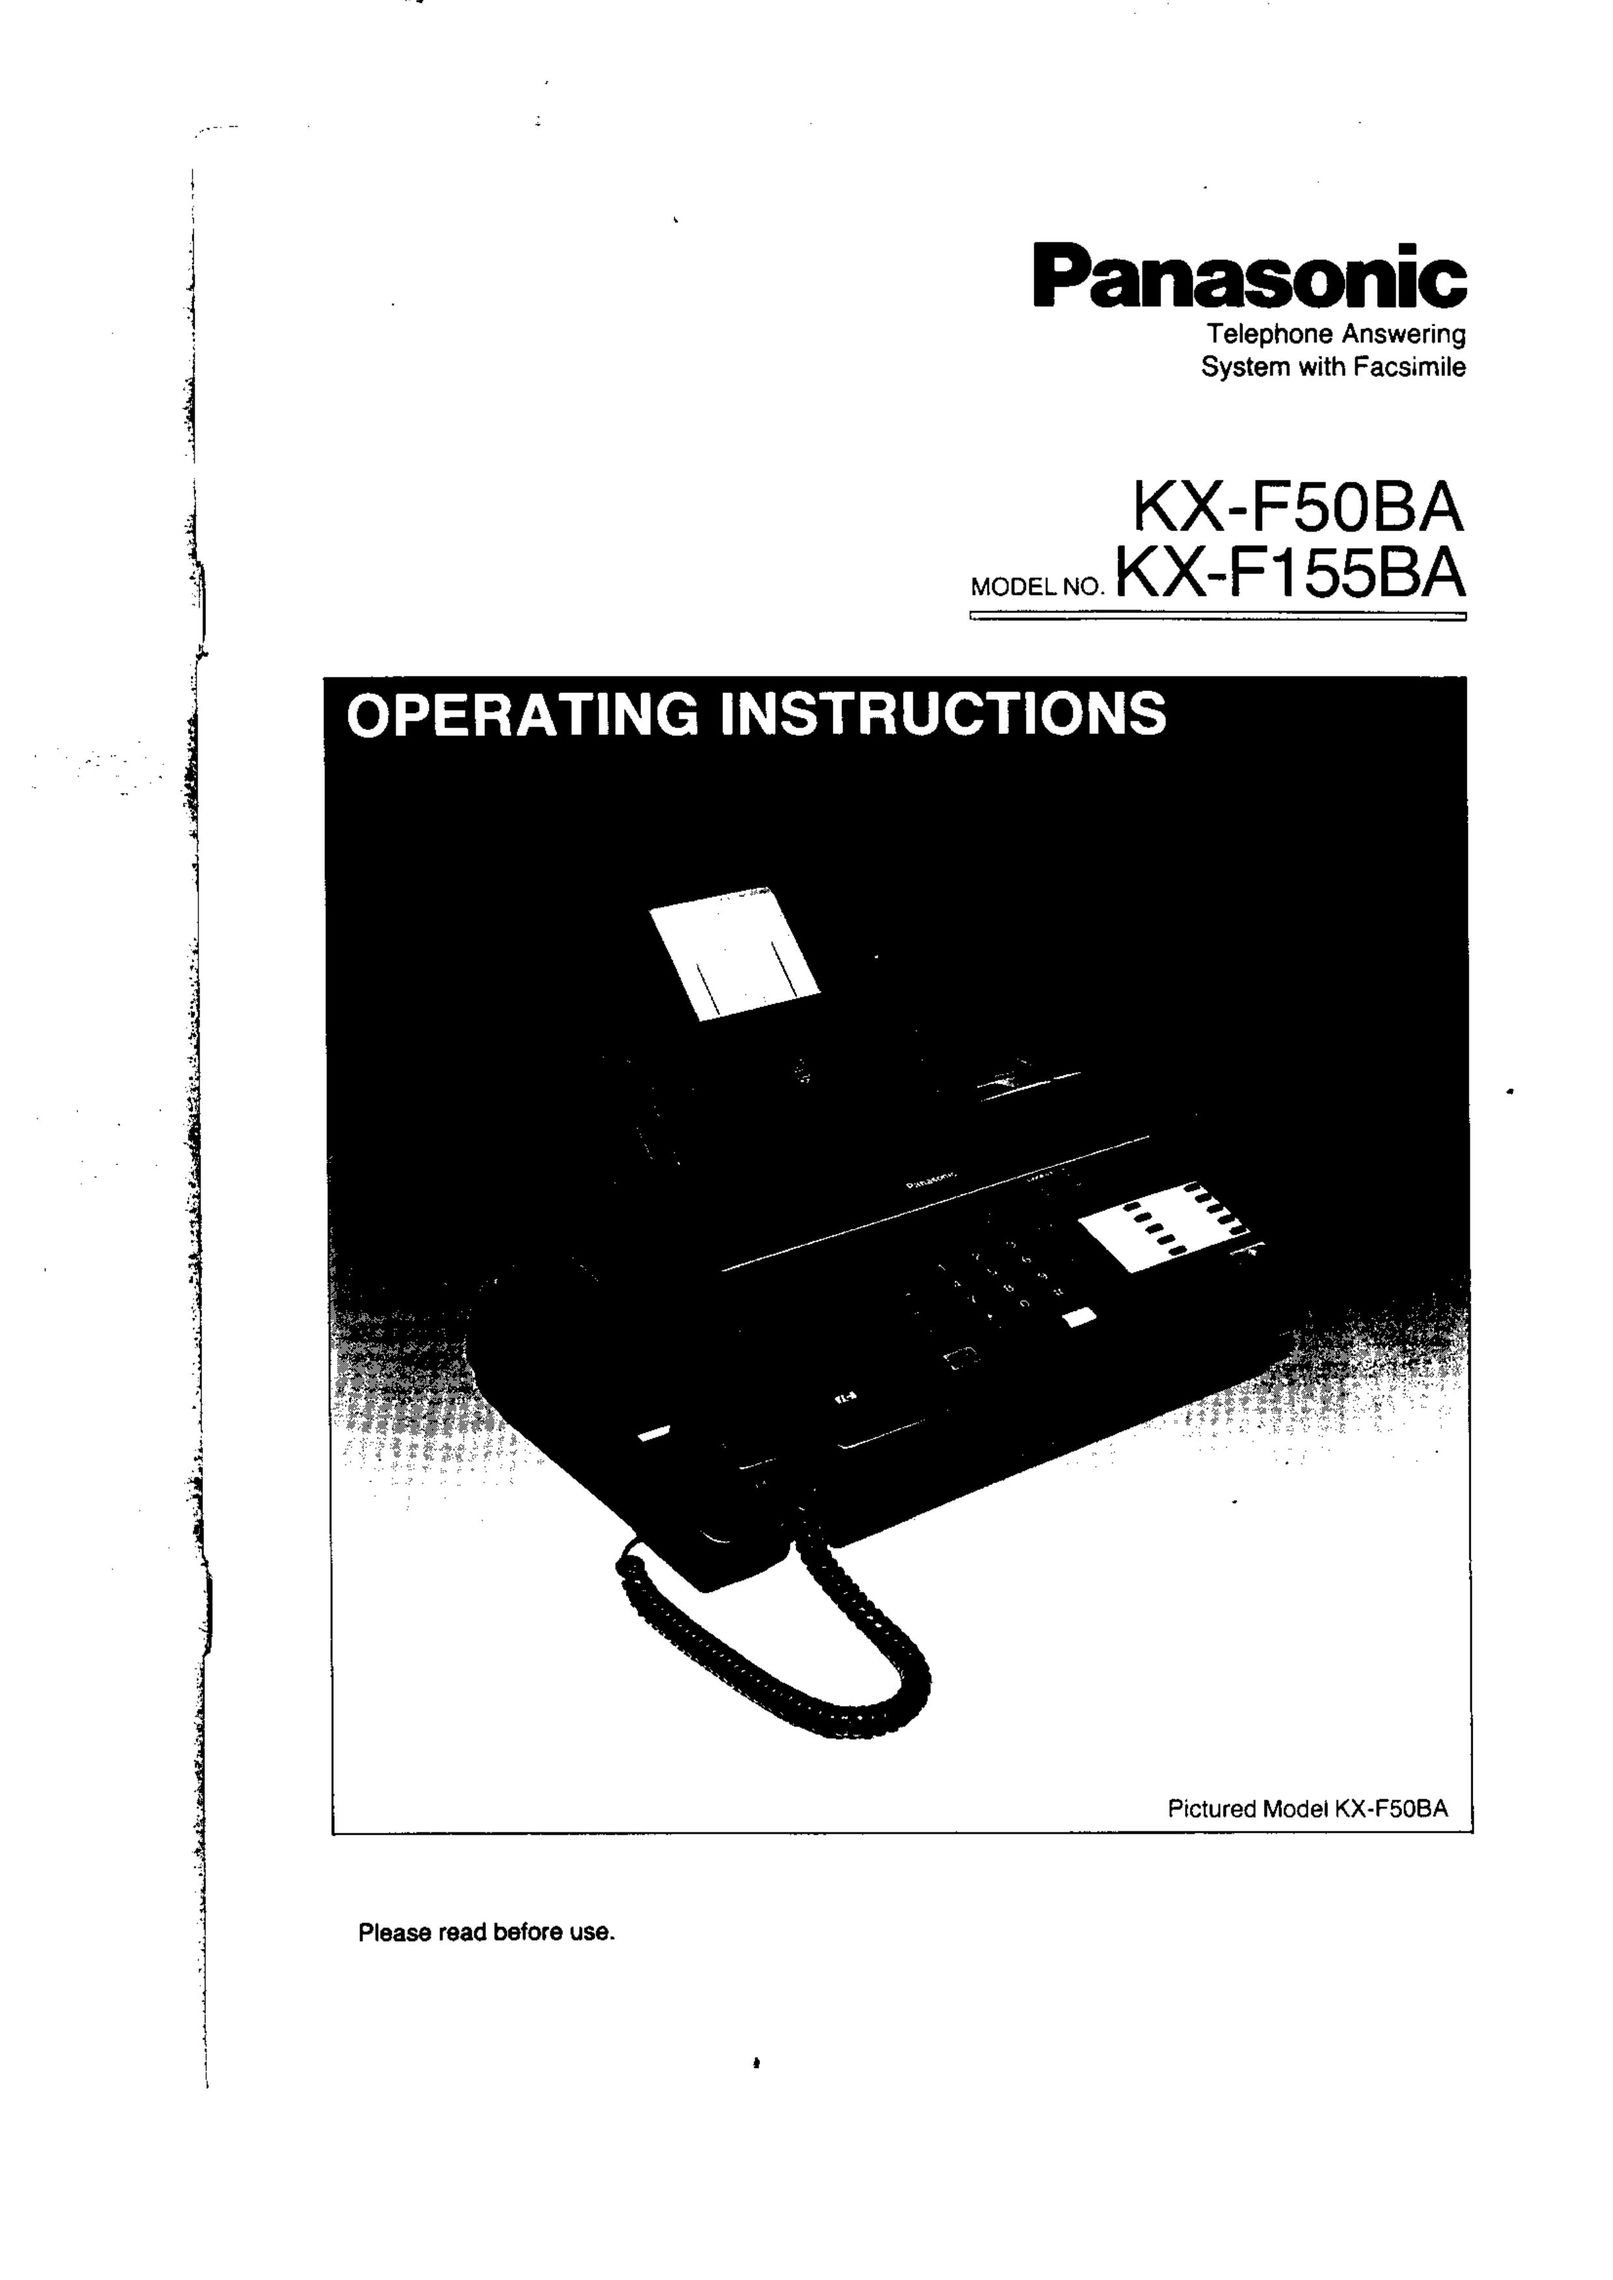 Panasonic KX-F50BA Answering Machine User Manual